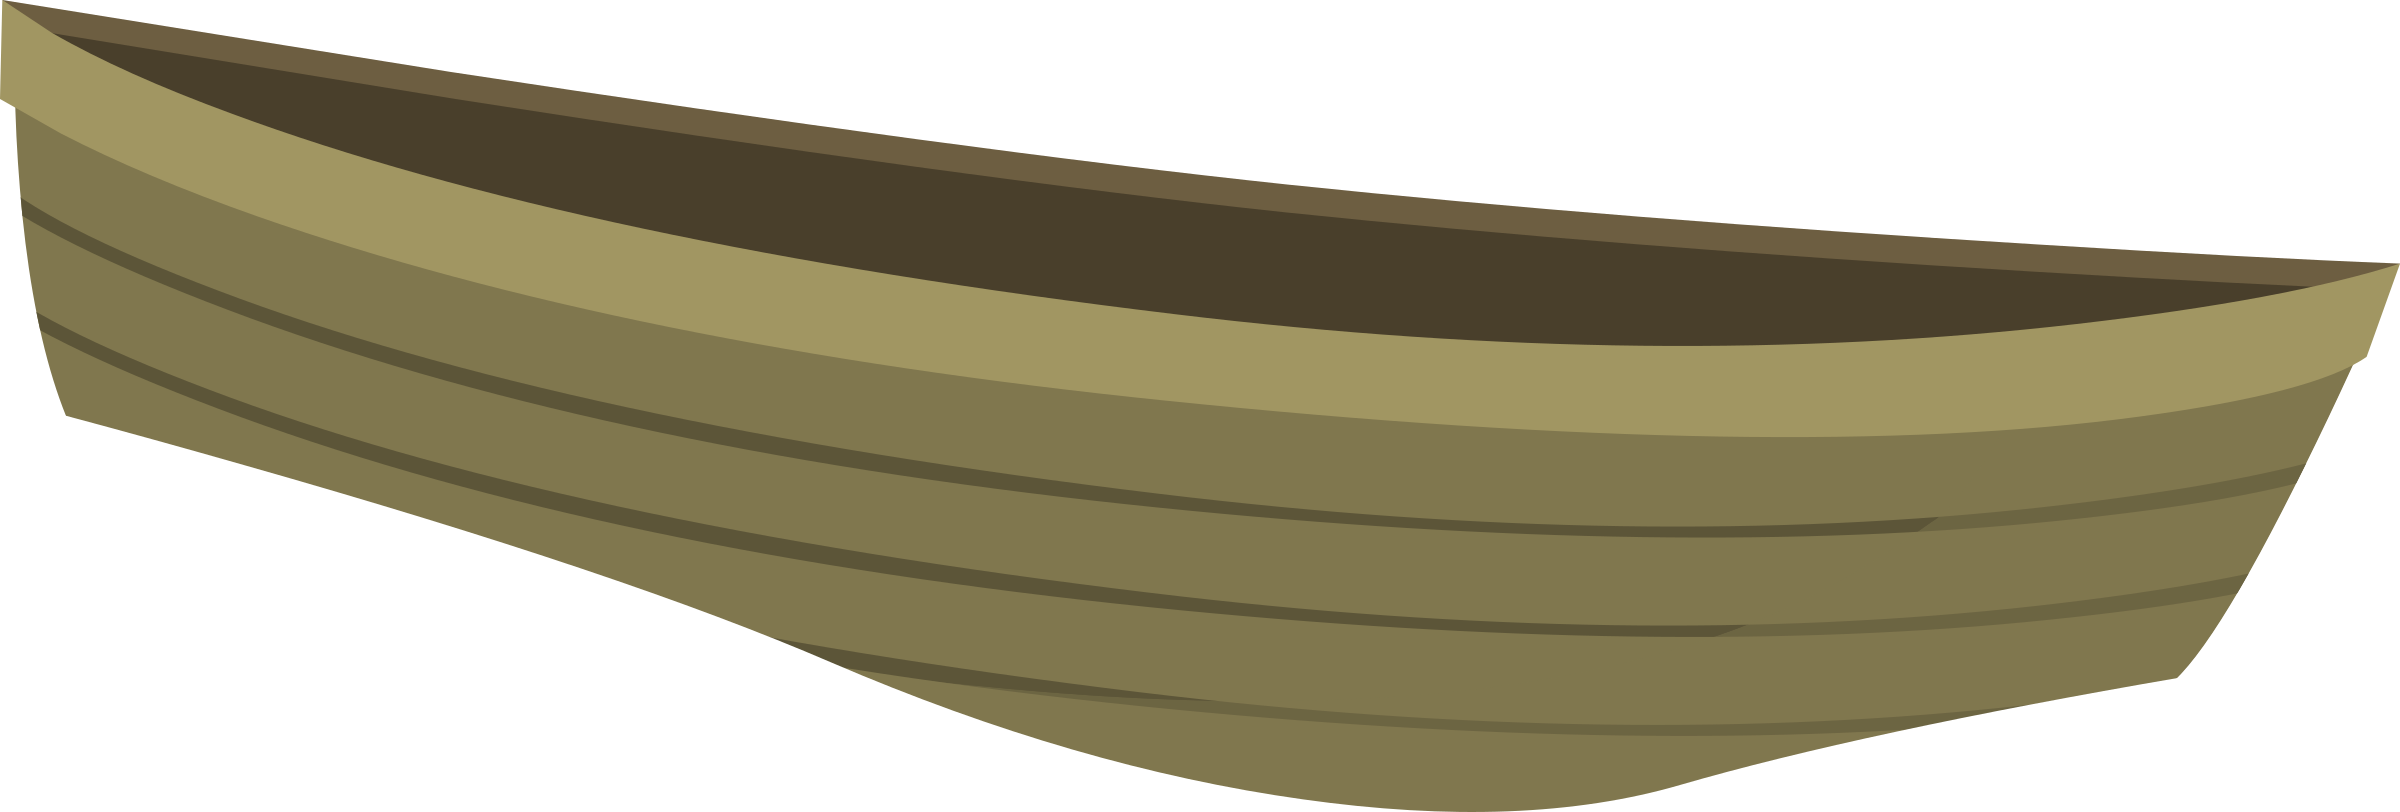 Boat PNG Transparent